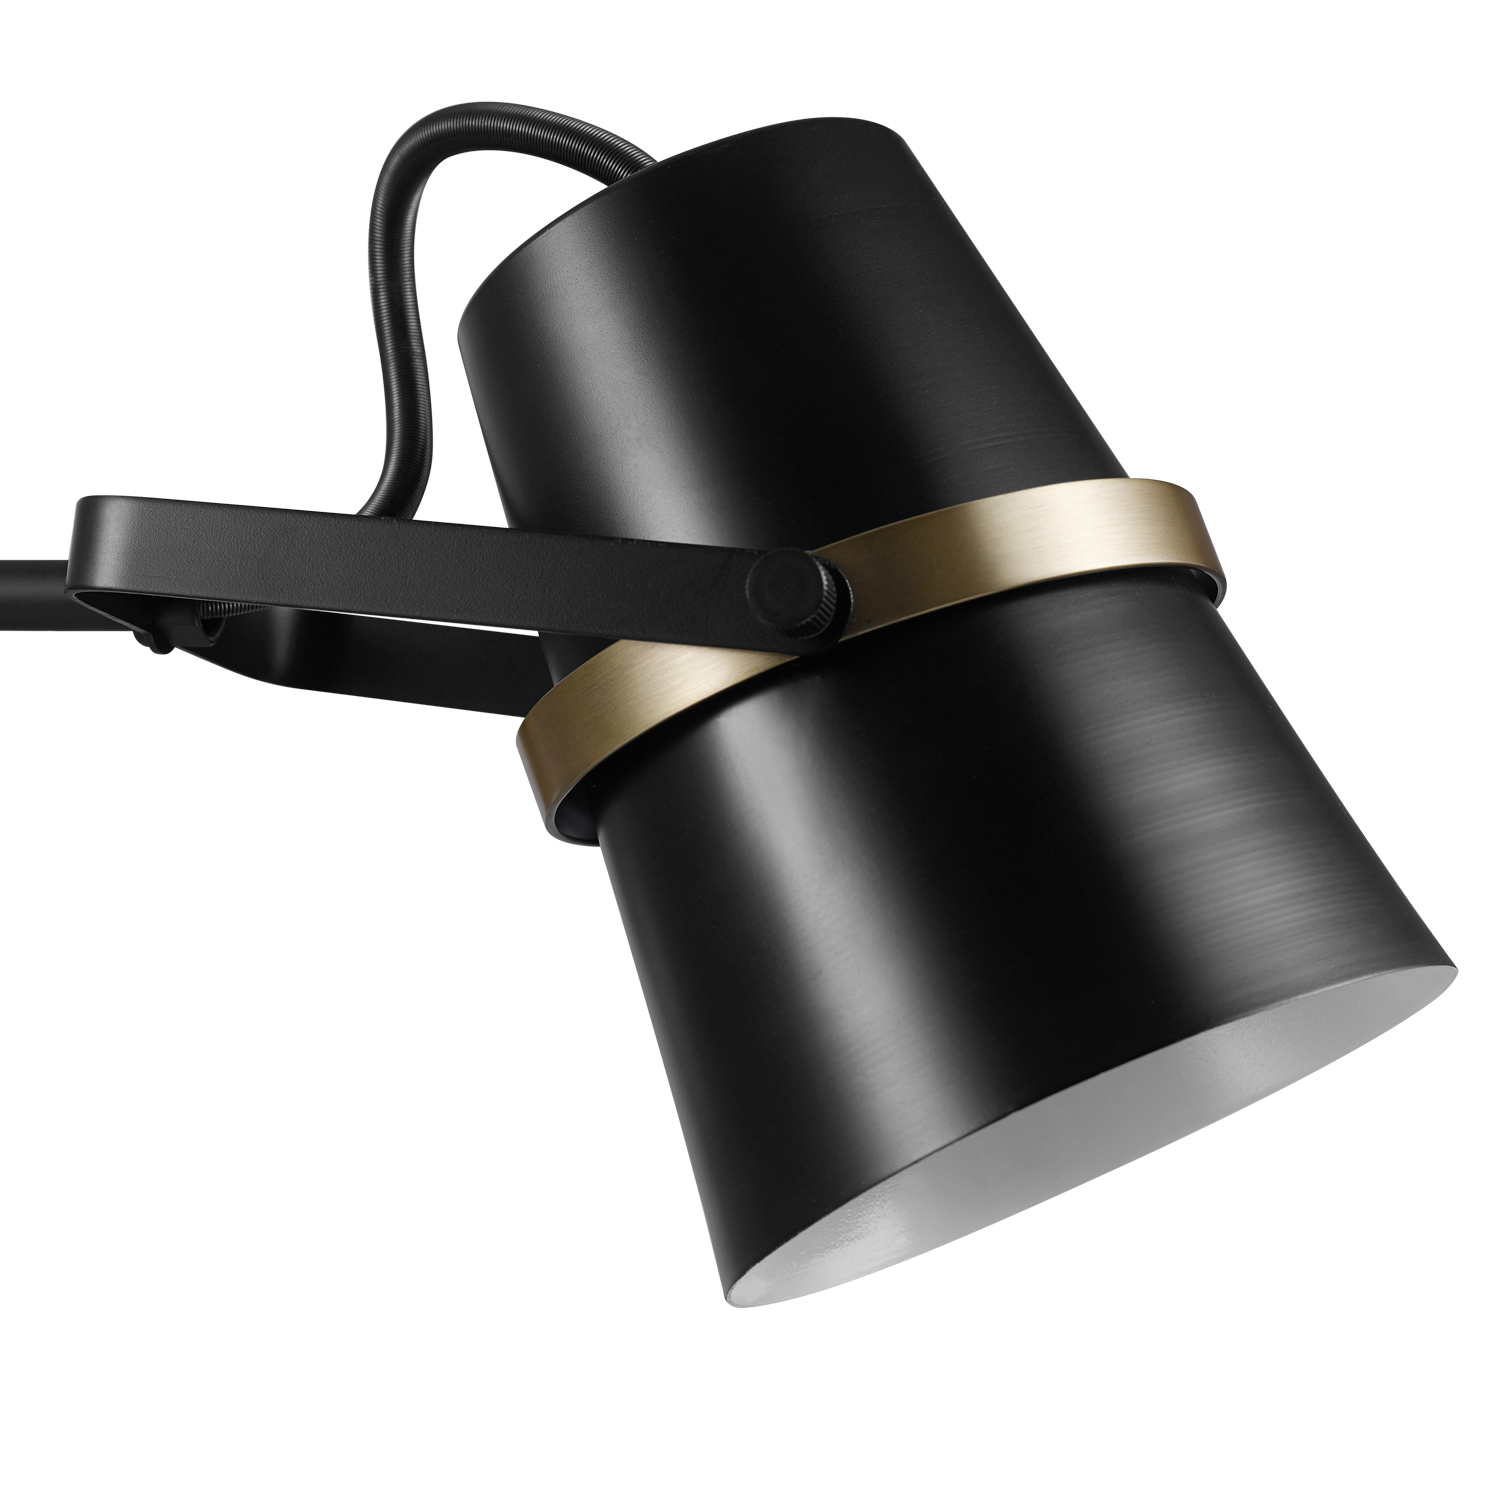 Globe Electric McKibbin 1-Light Matte Black Plug-In or Hardwire Swing Arm Wall Sconce, 51345 - image 2 of 3